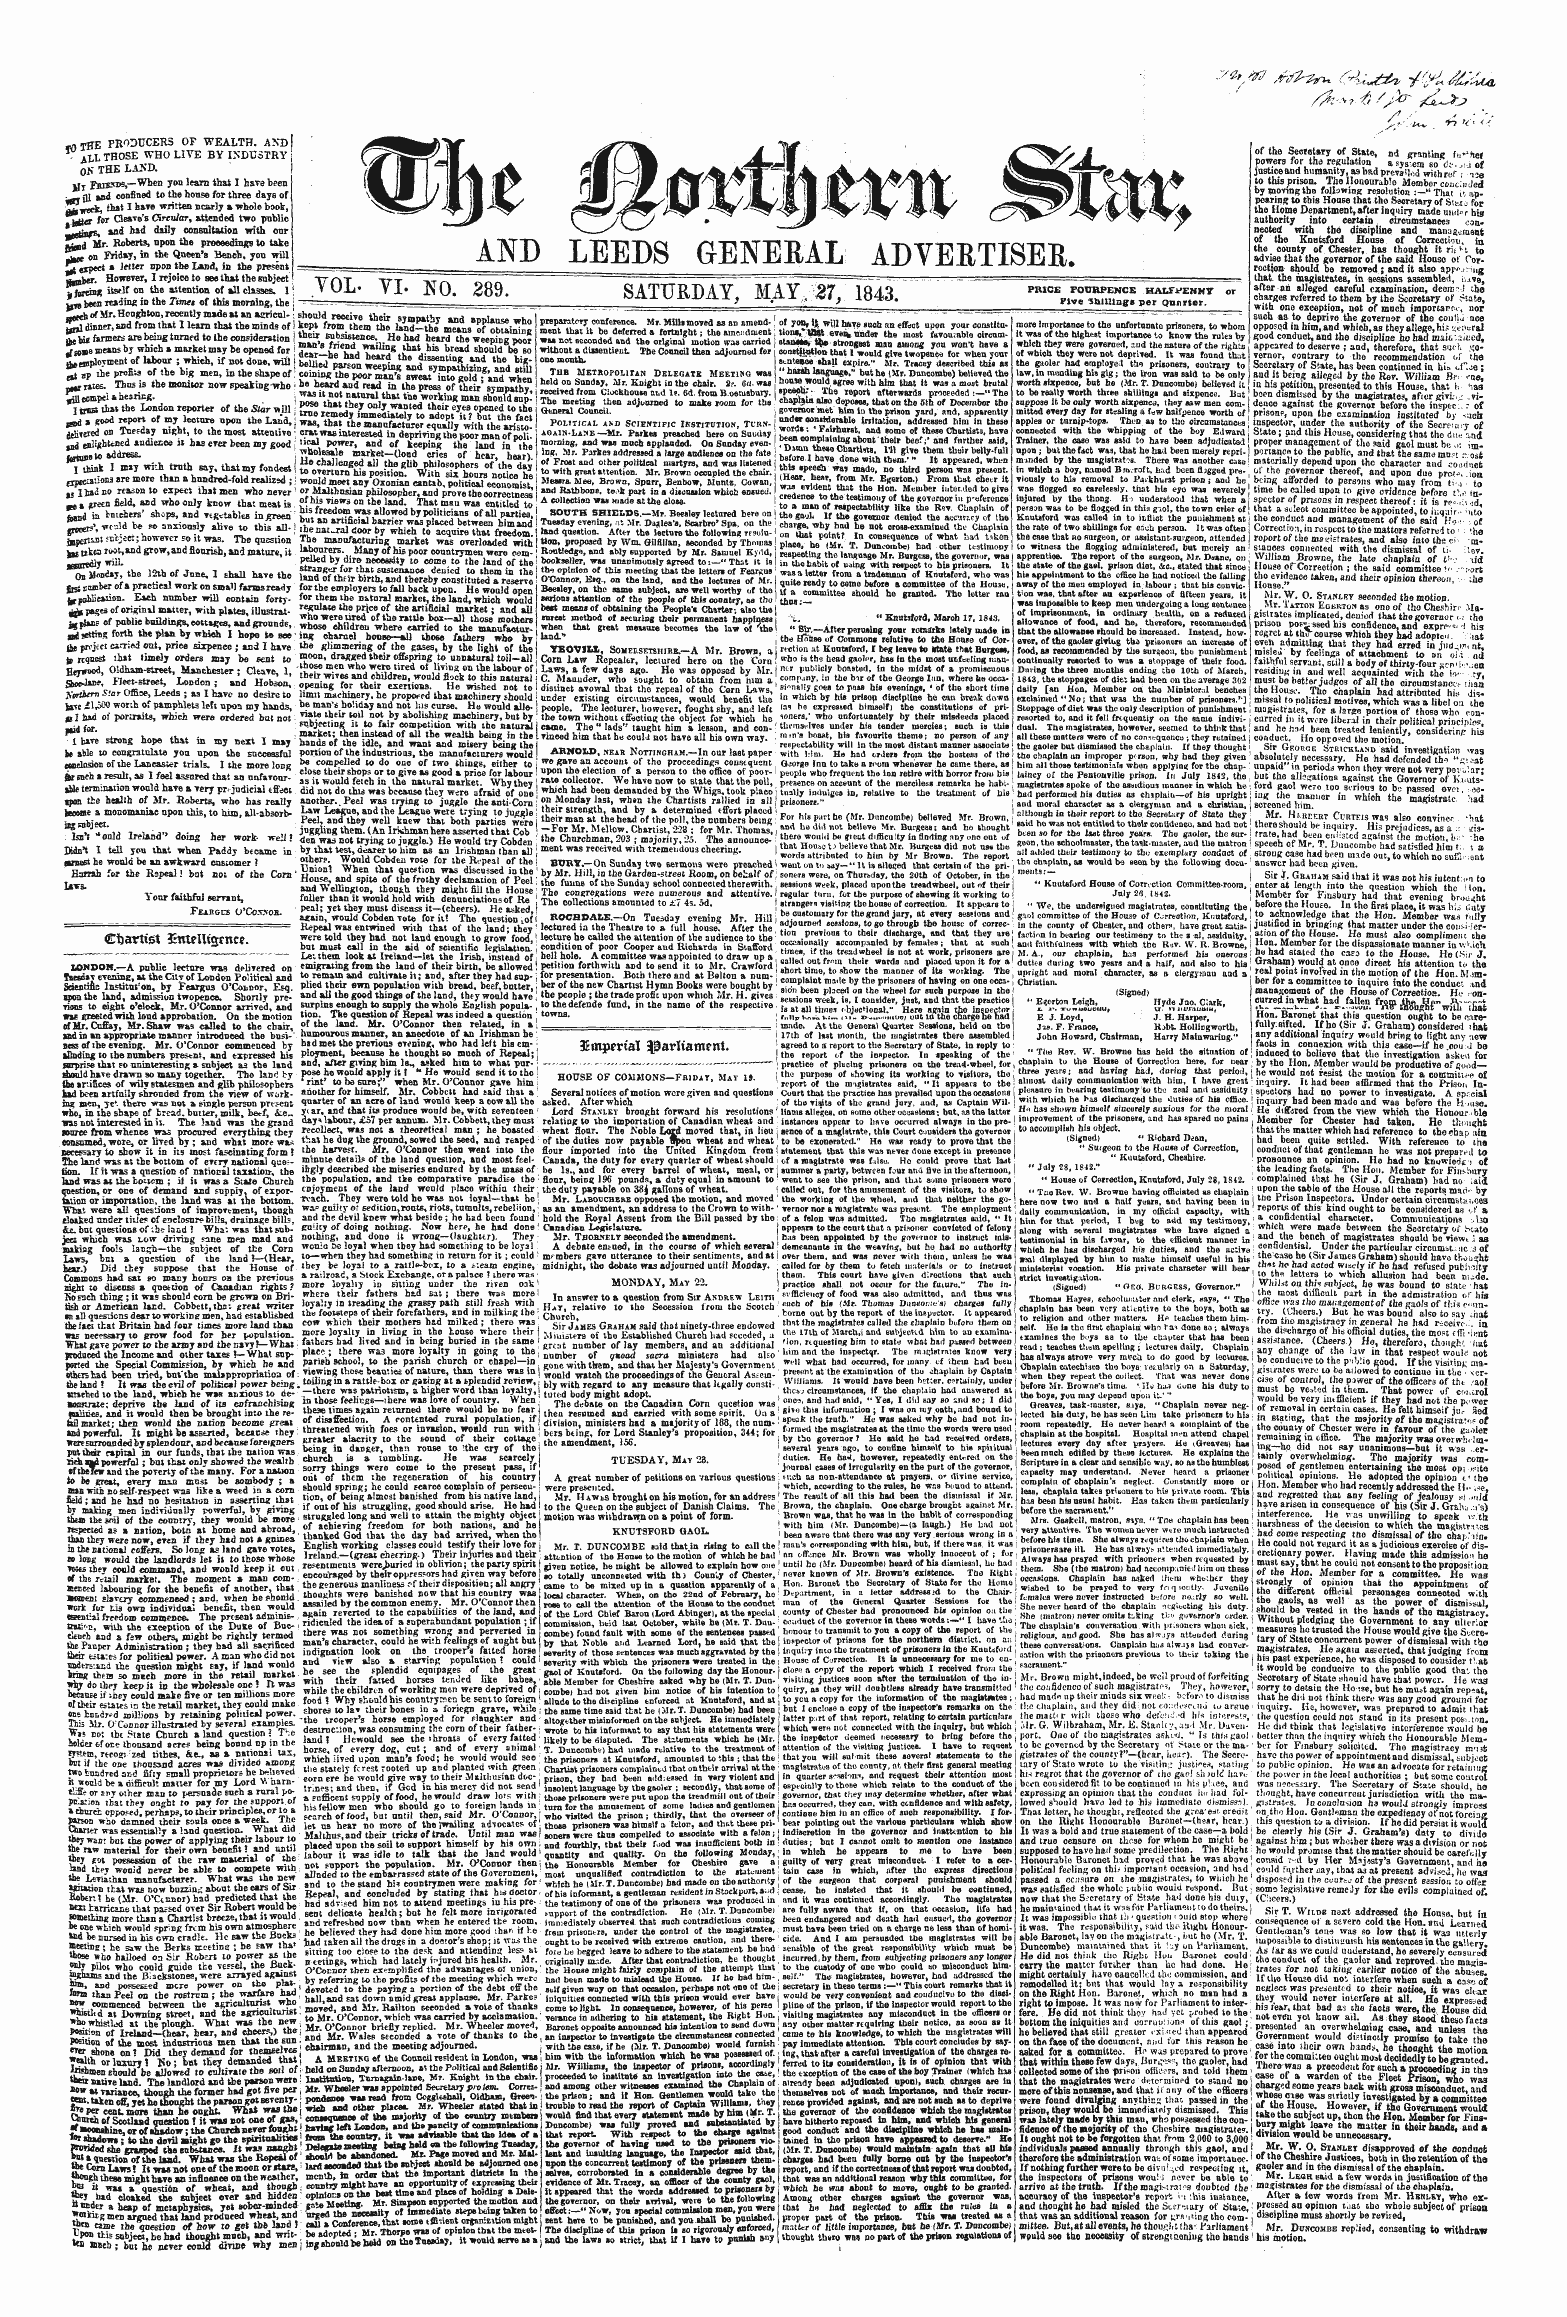 Northern Star (1837-1852): jS F Y, 1st edition - 32rnpmaj ^Sarlmmcnt.